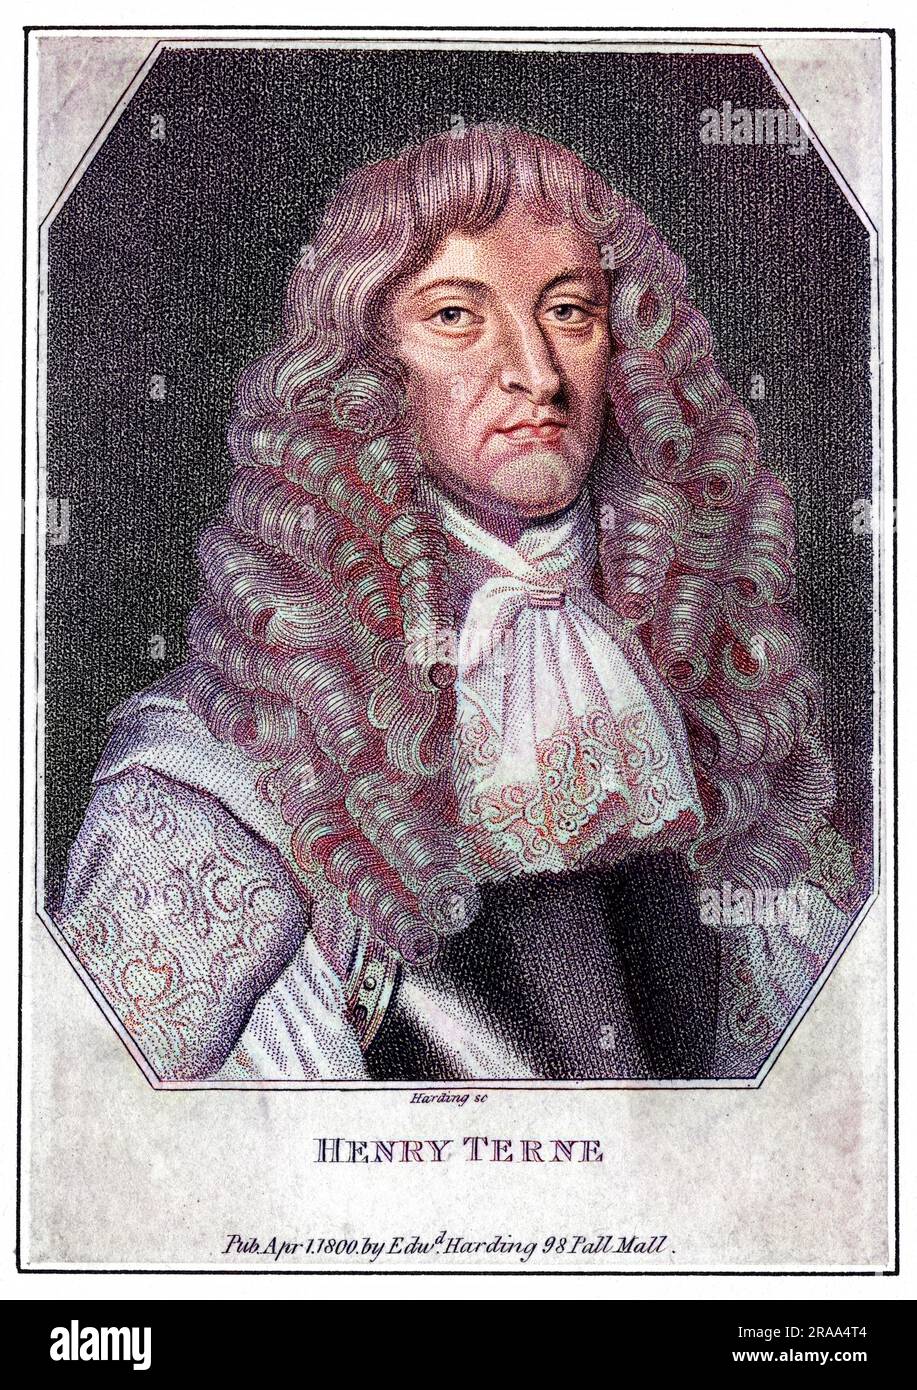 HENRY TERNE British naval commander     Date: ? - 1666 Stock Photo